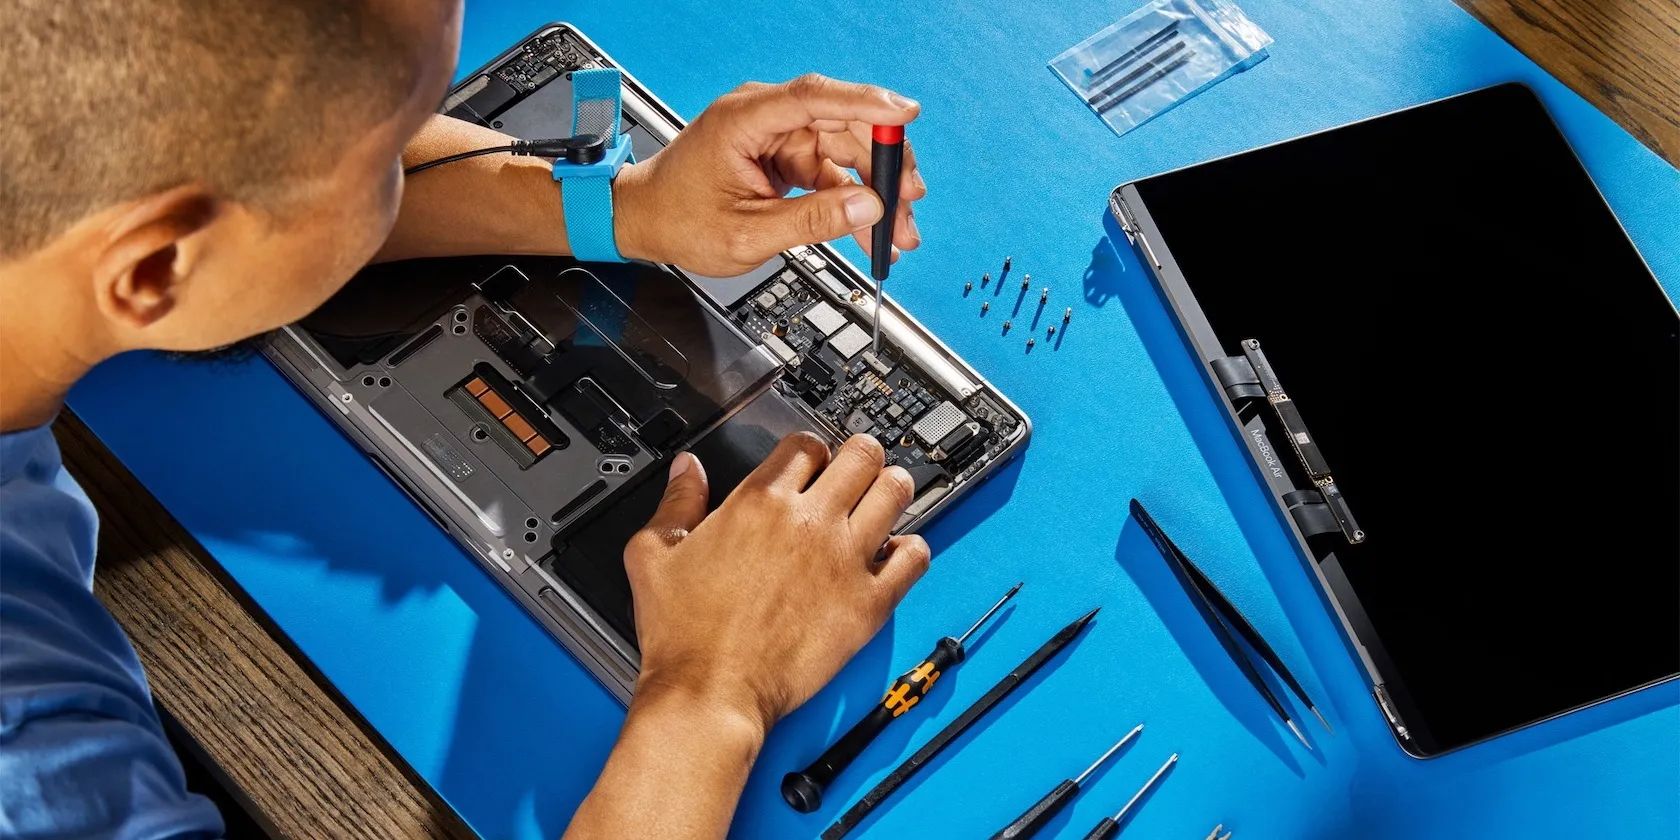 A technician repairing a MacBook